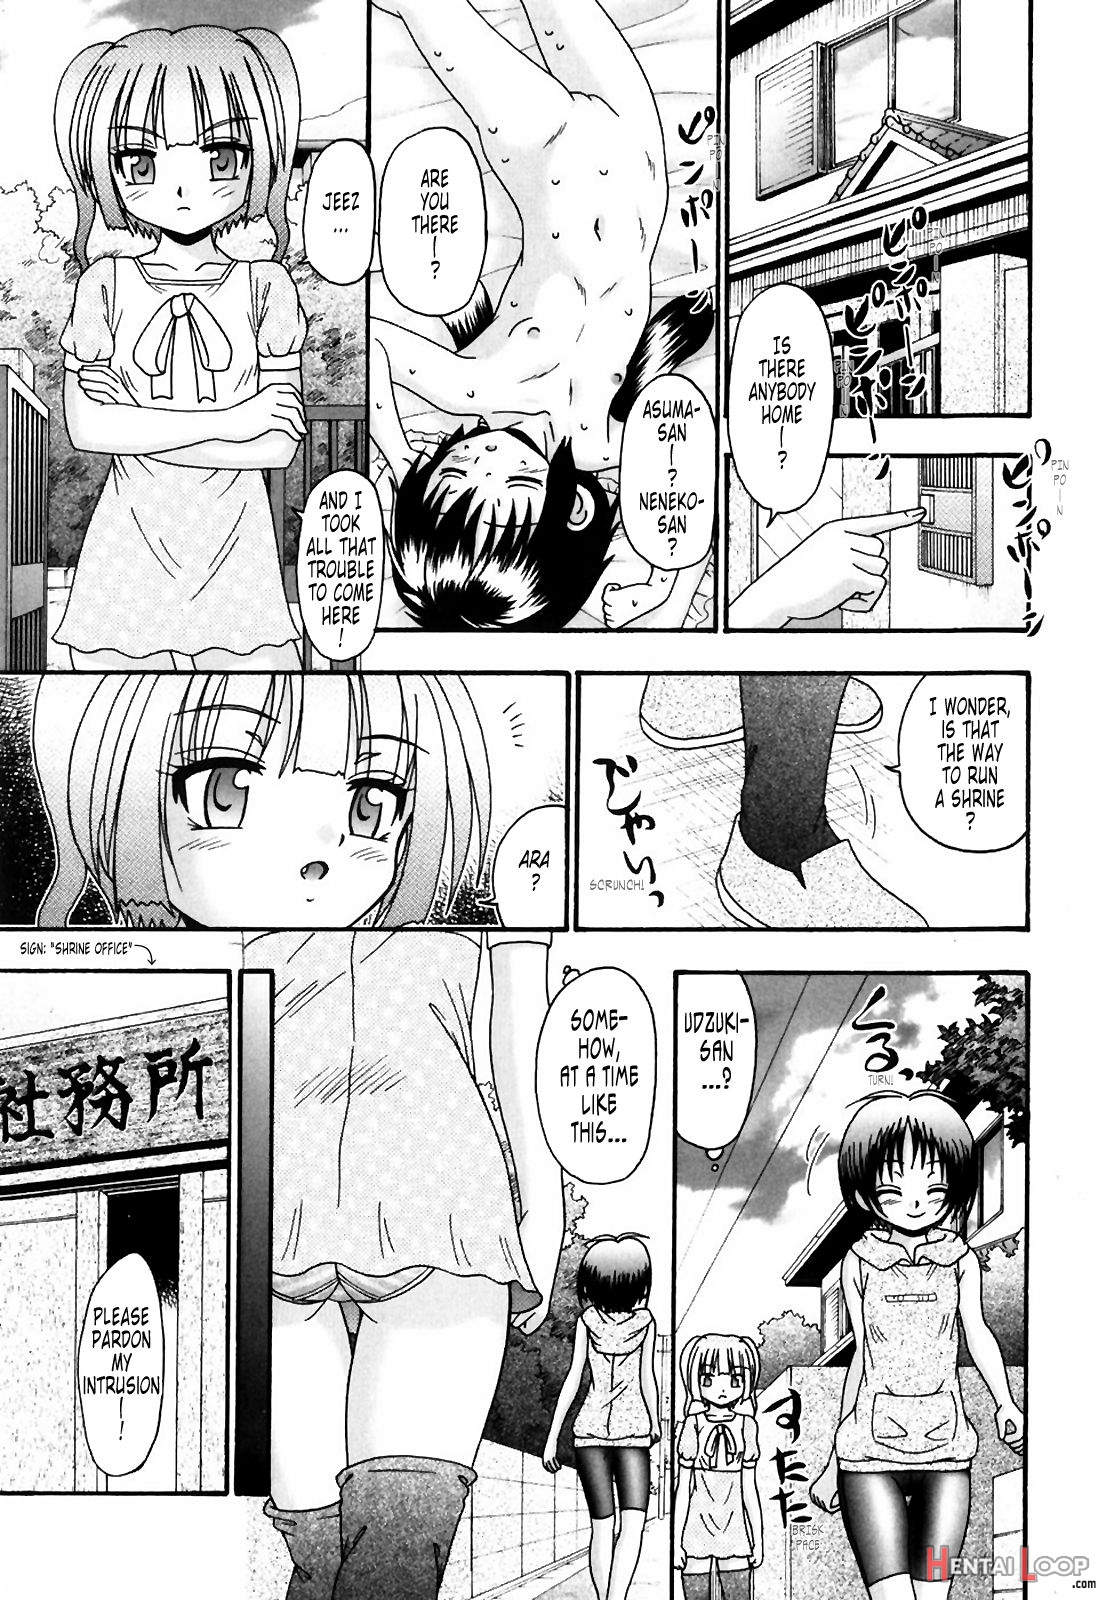 Tsukumimi 1&2 page 39